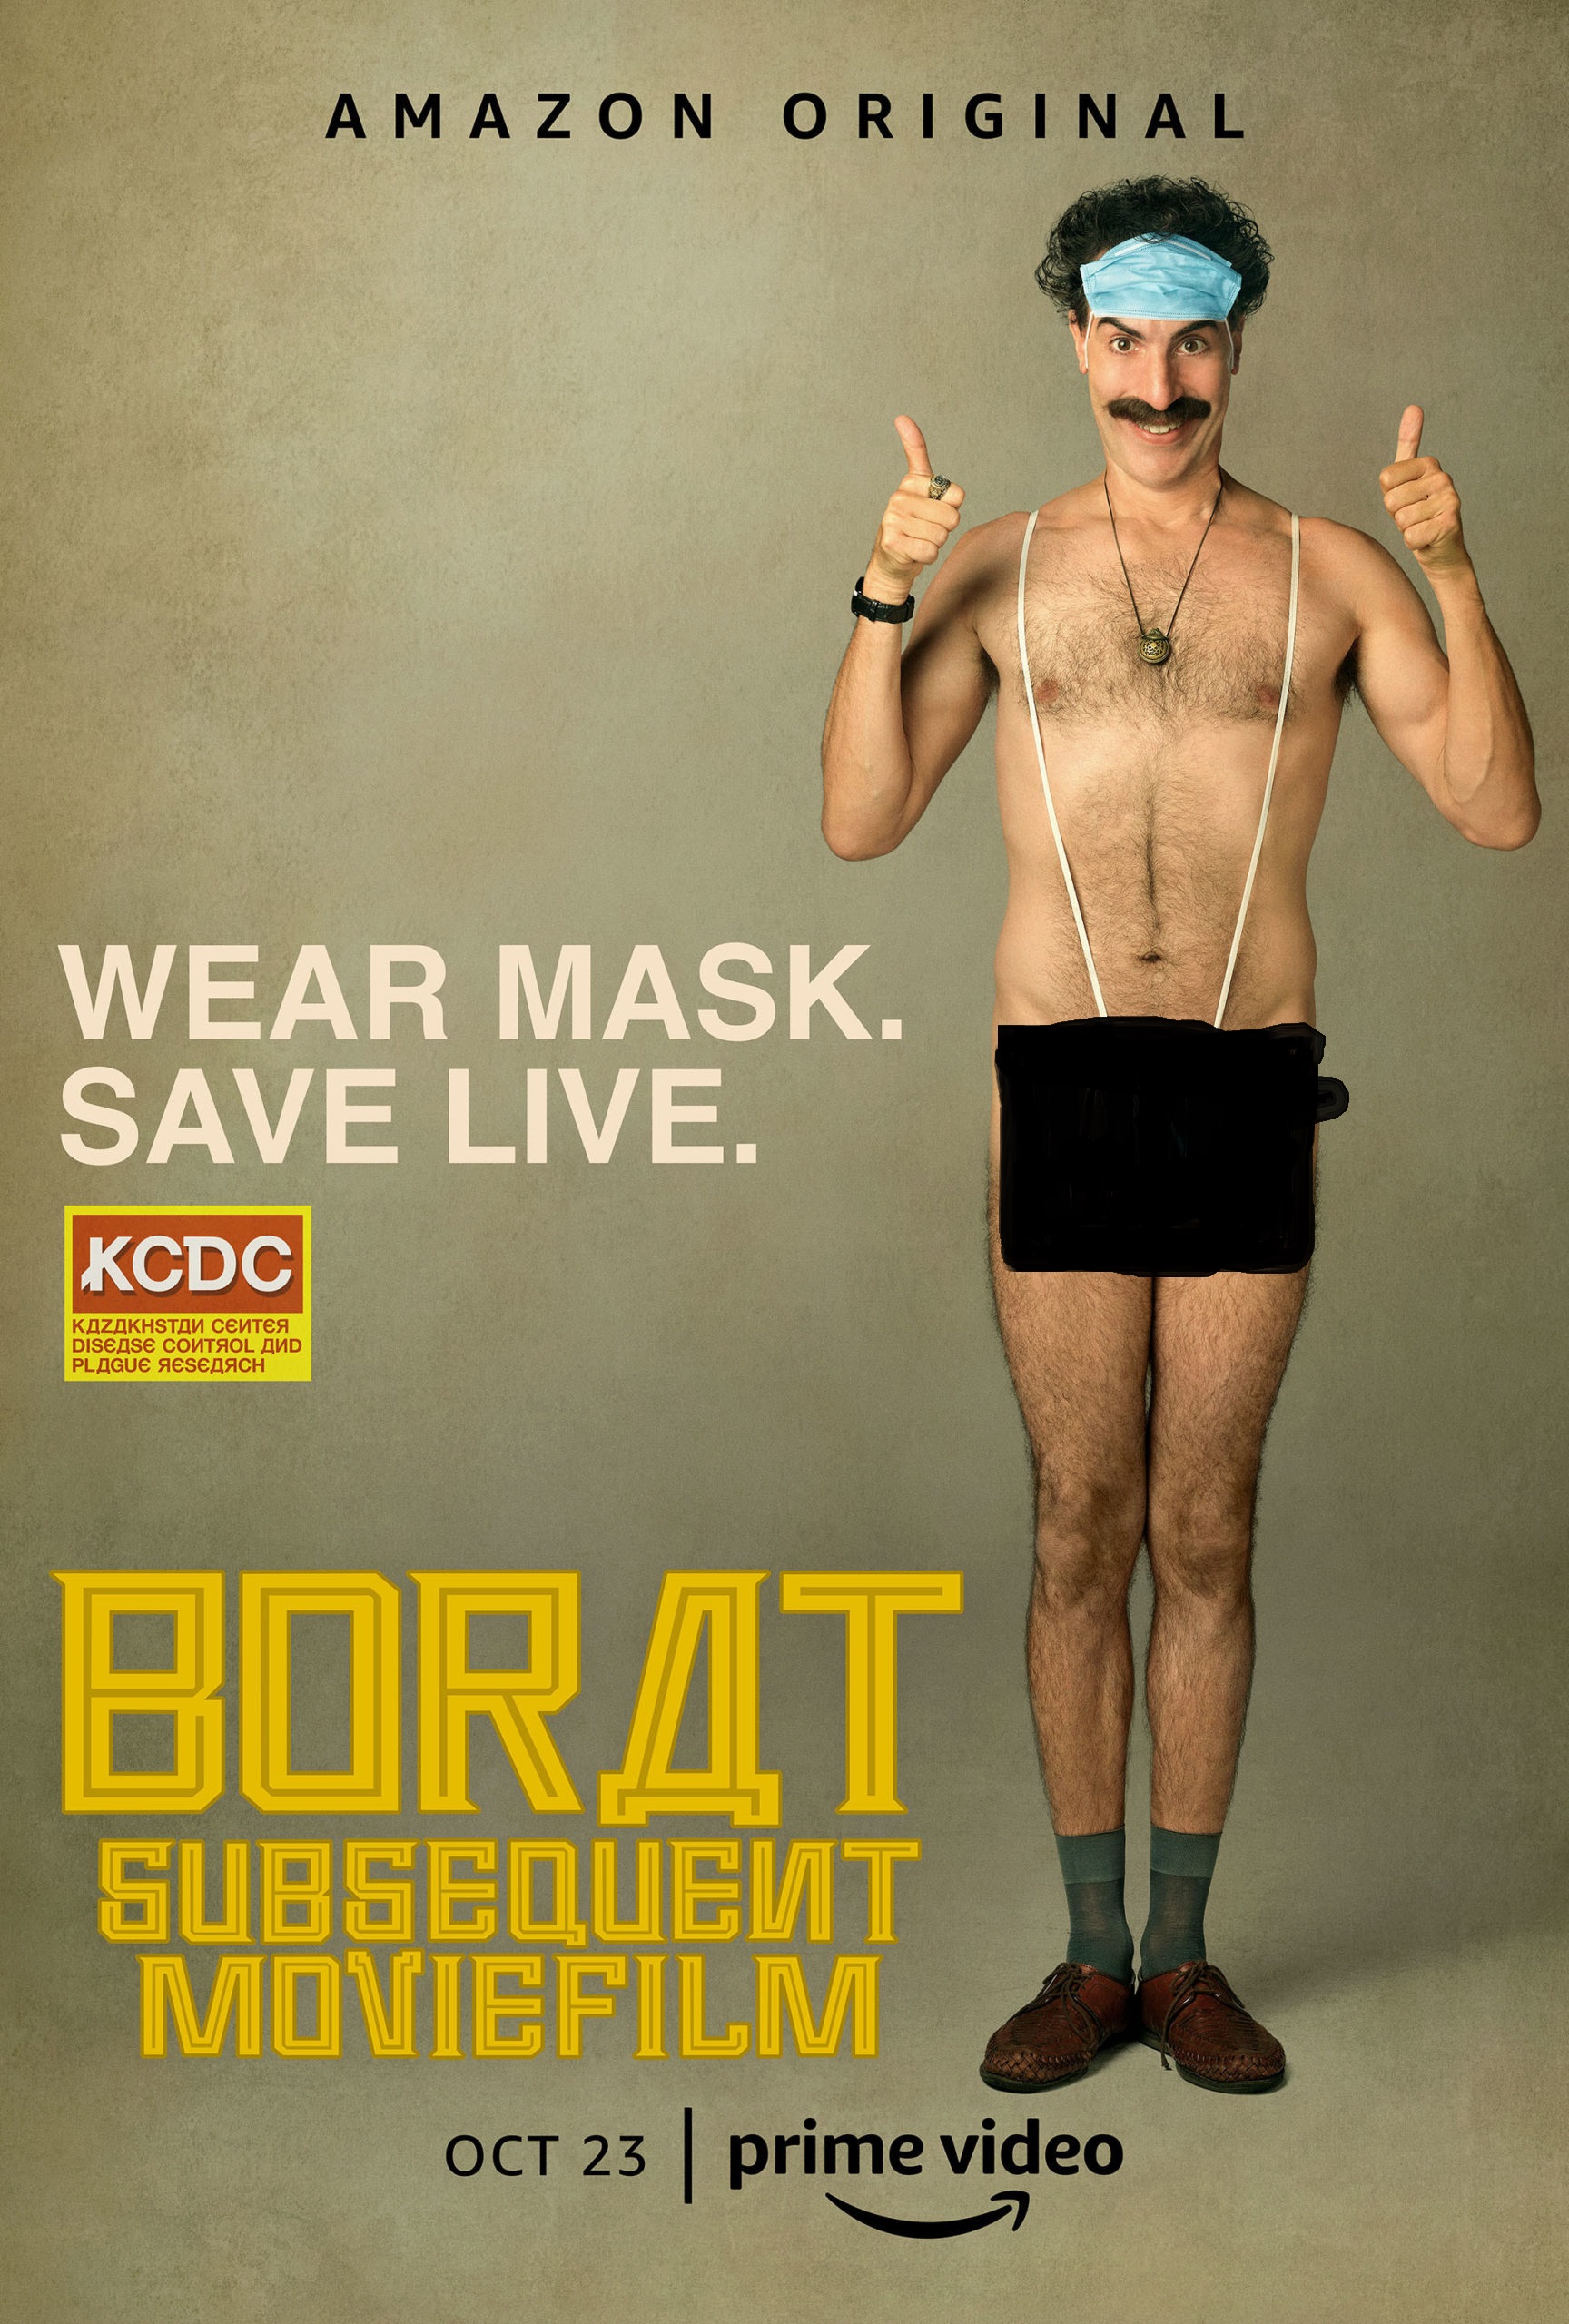 wilkes university - Amazon Original Wear Mask. Save Live. Kcdc Borat Subsequevit Moviefilm Oct 23 prime video